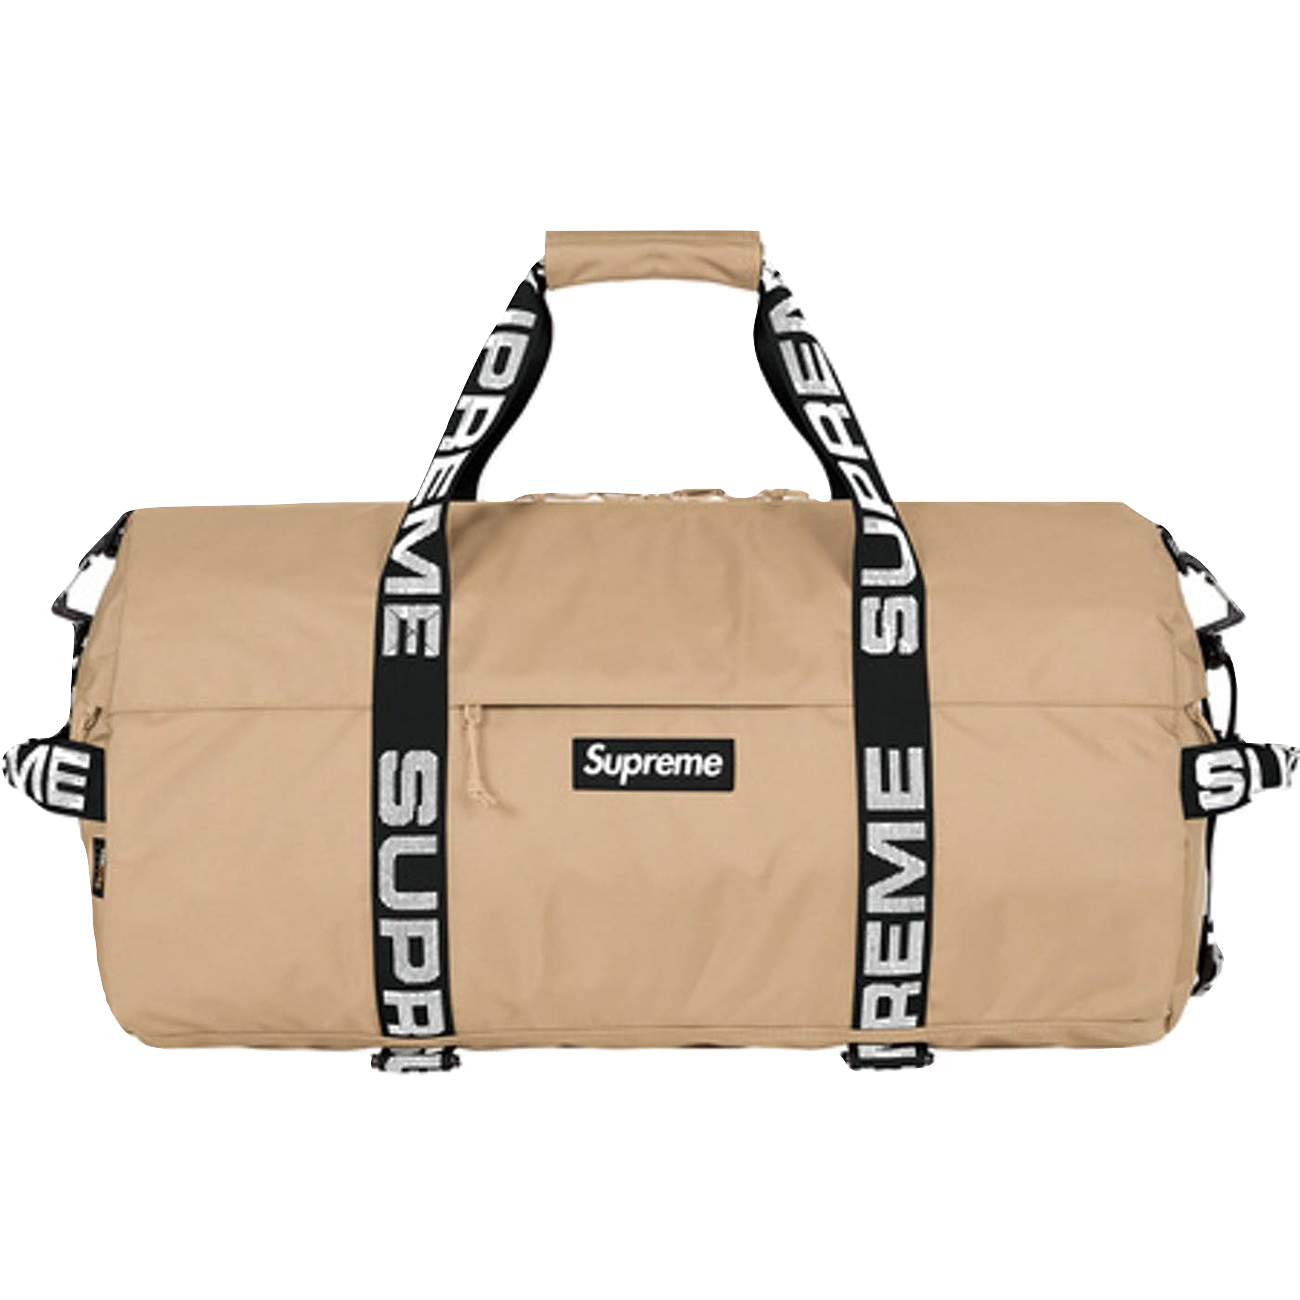 Supreme Duffle Bag SS18 - Tan